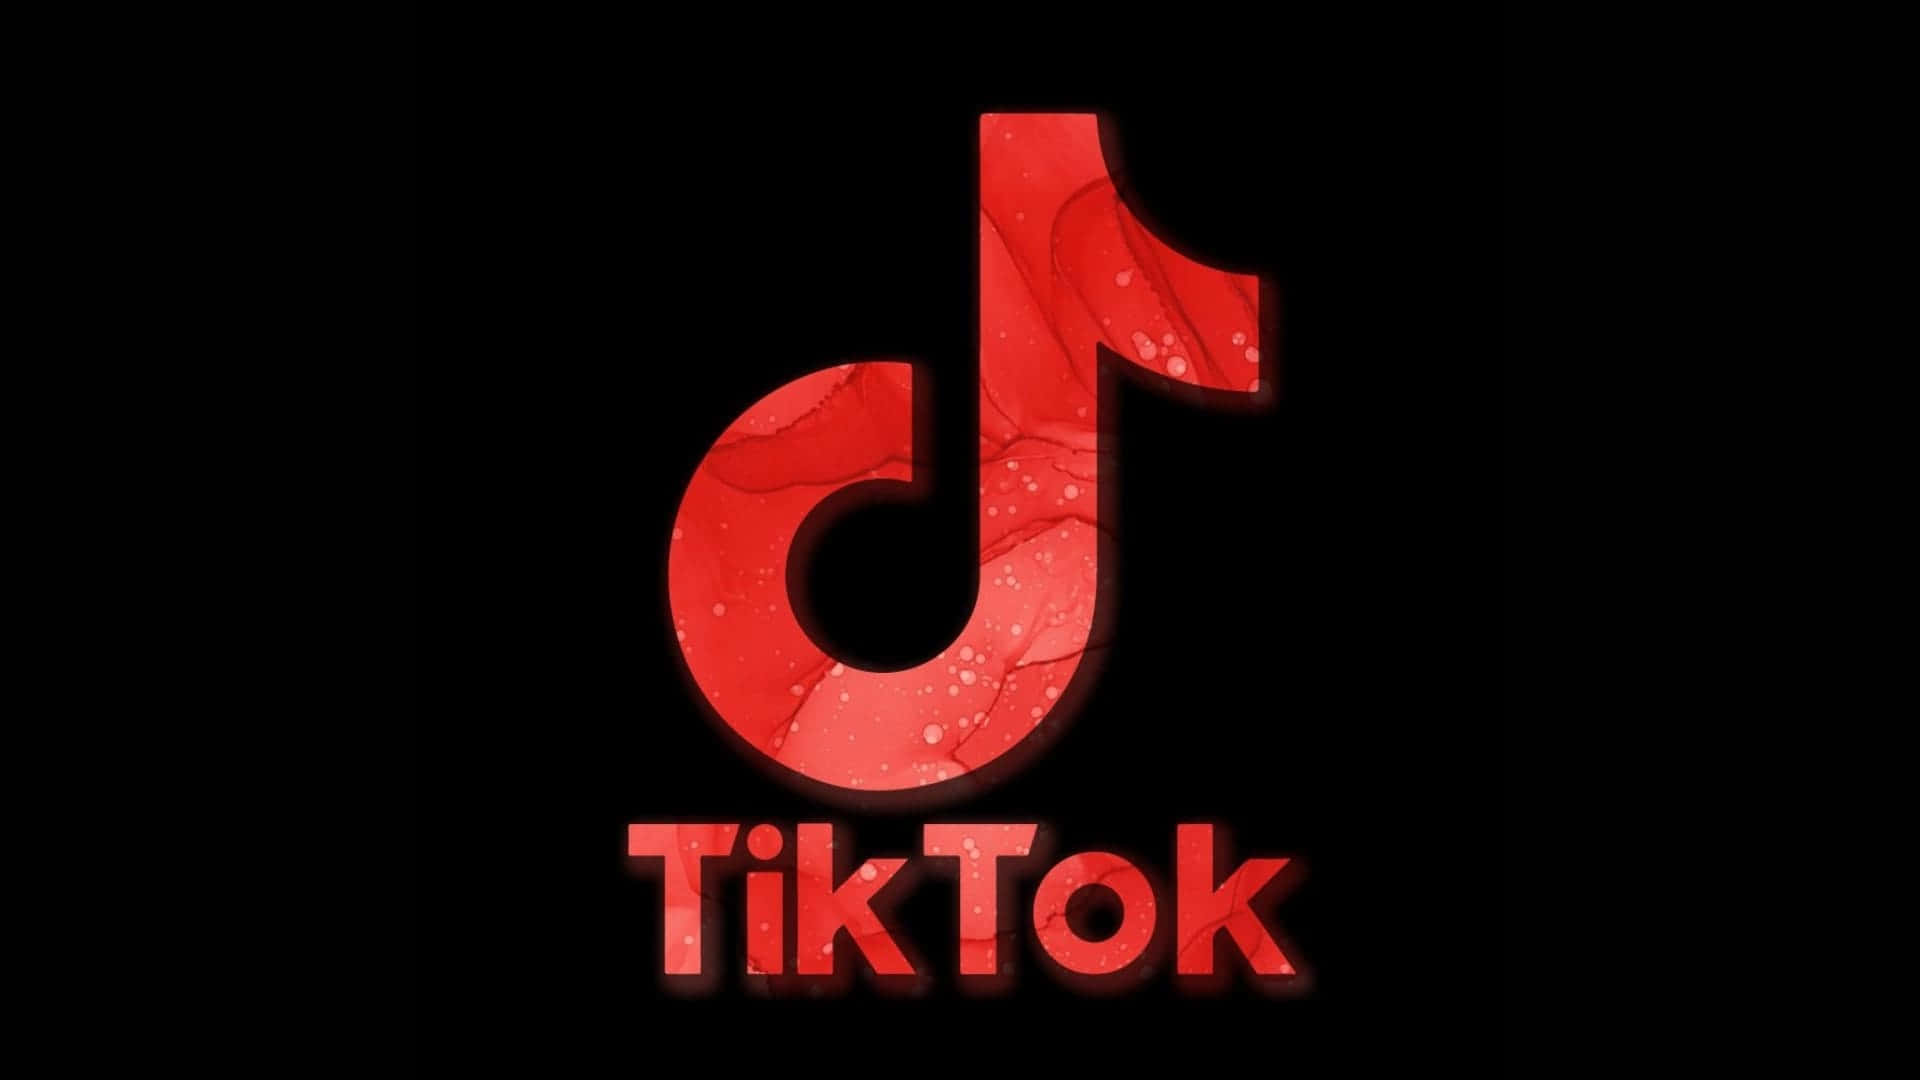 tiktok logo on a black background